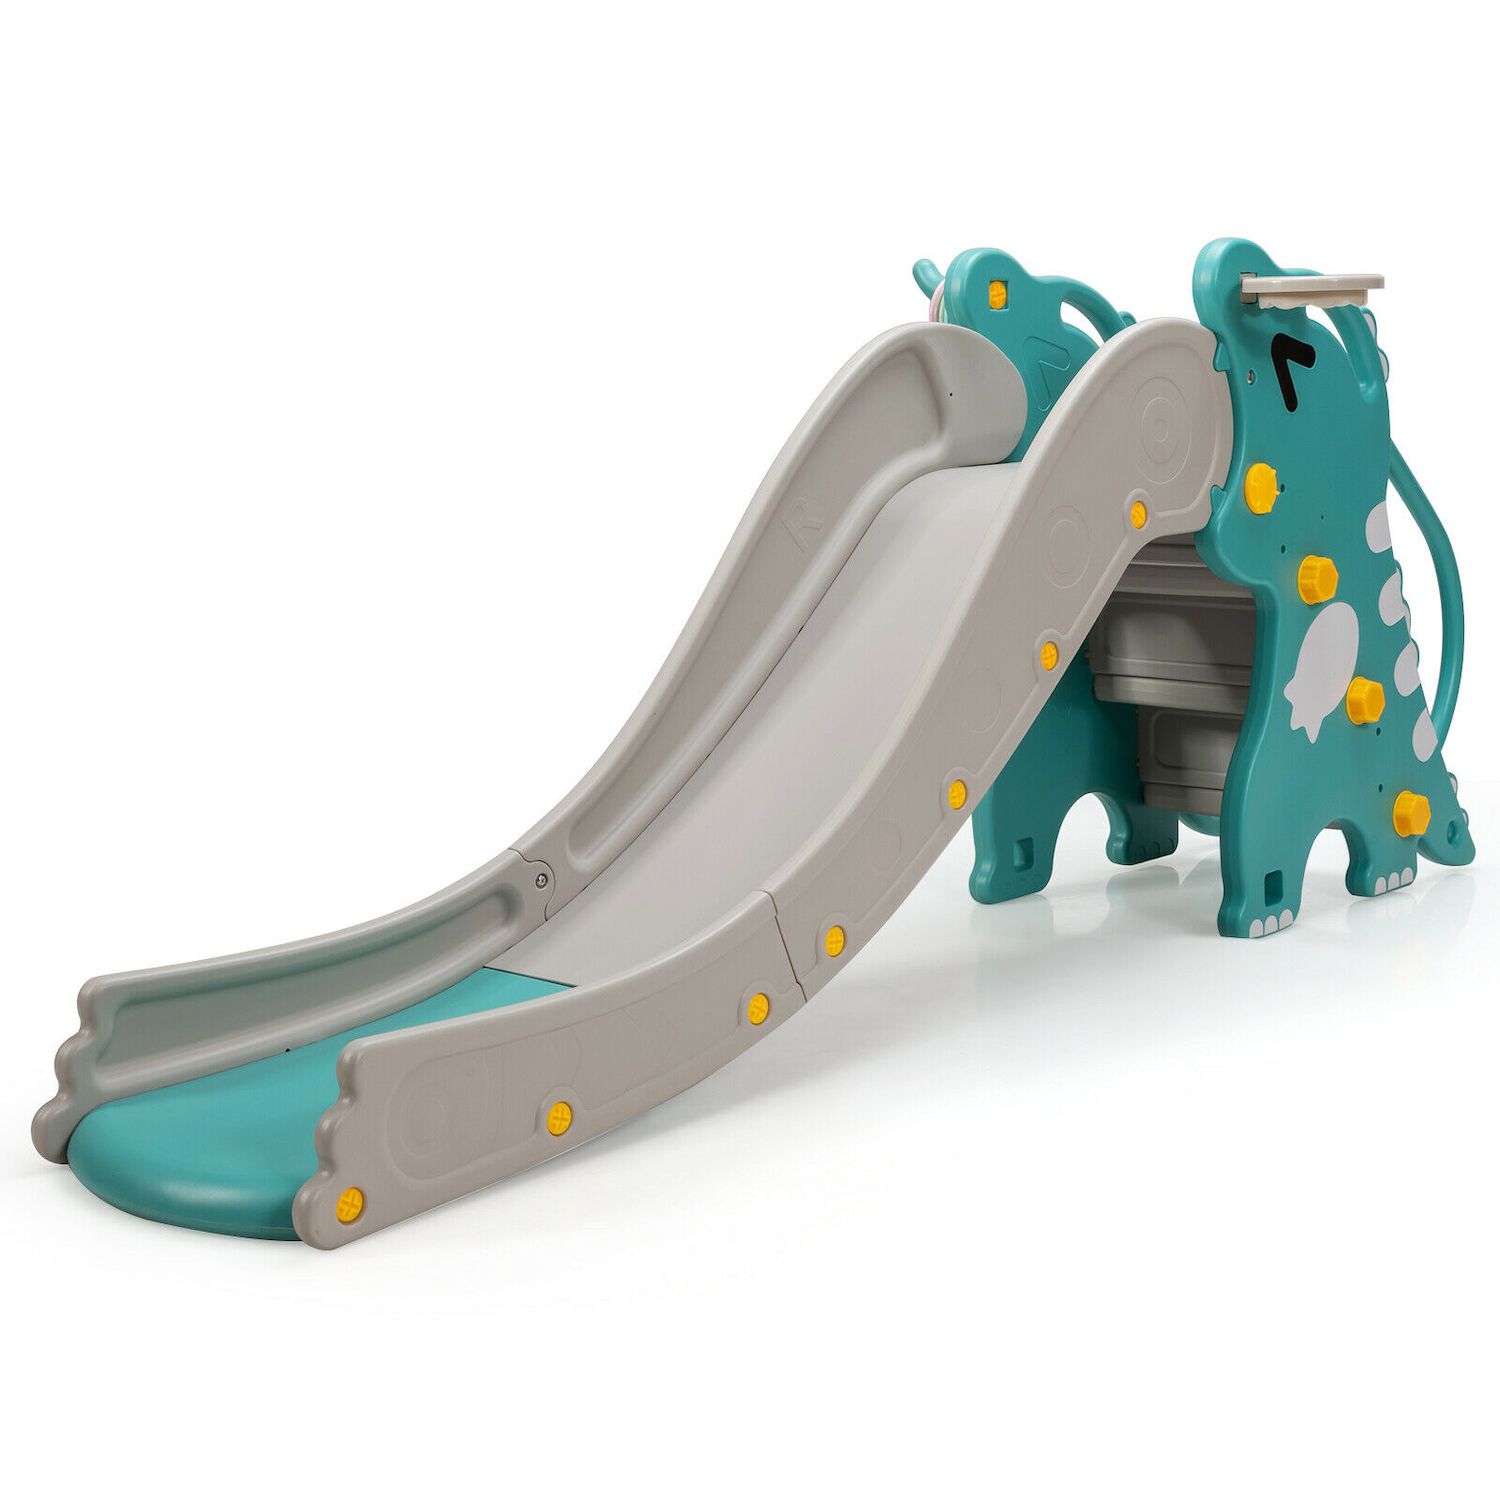 4-in-1 Crawl Climb Foam Shapes Toddler Kids Playset